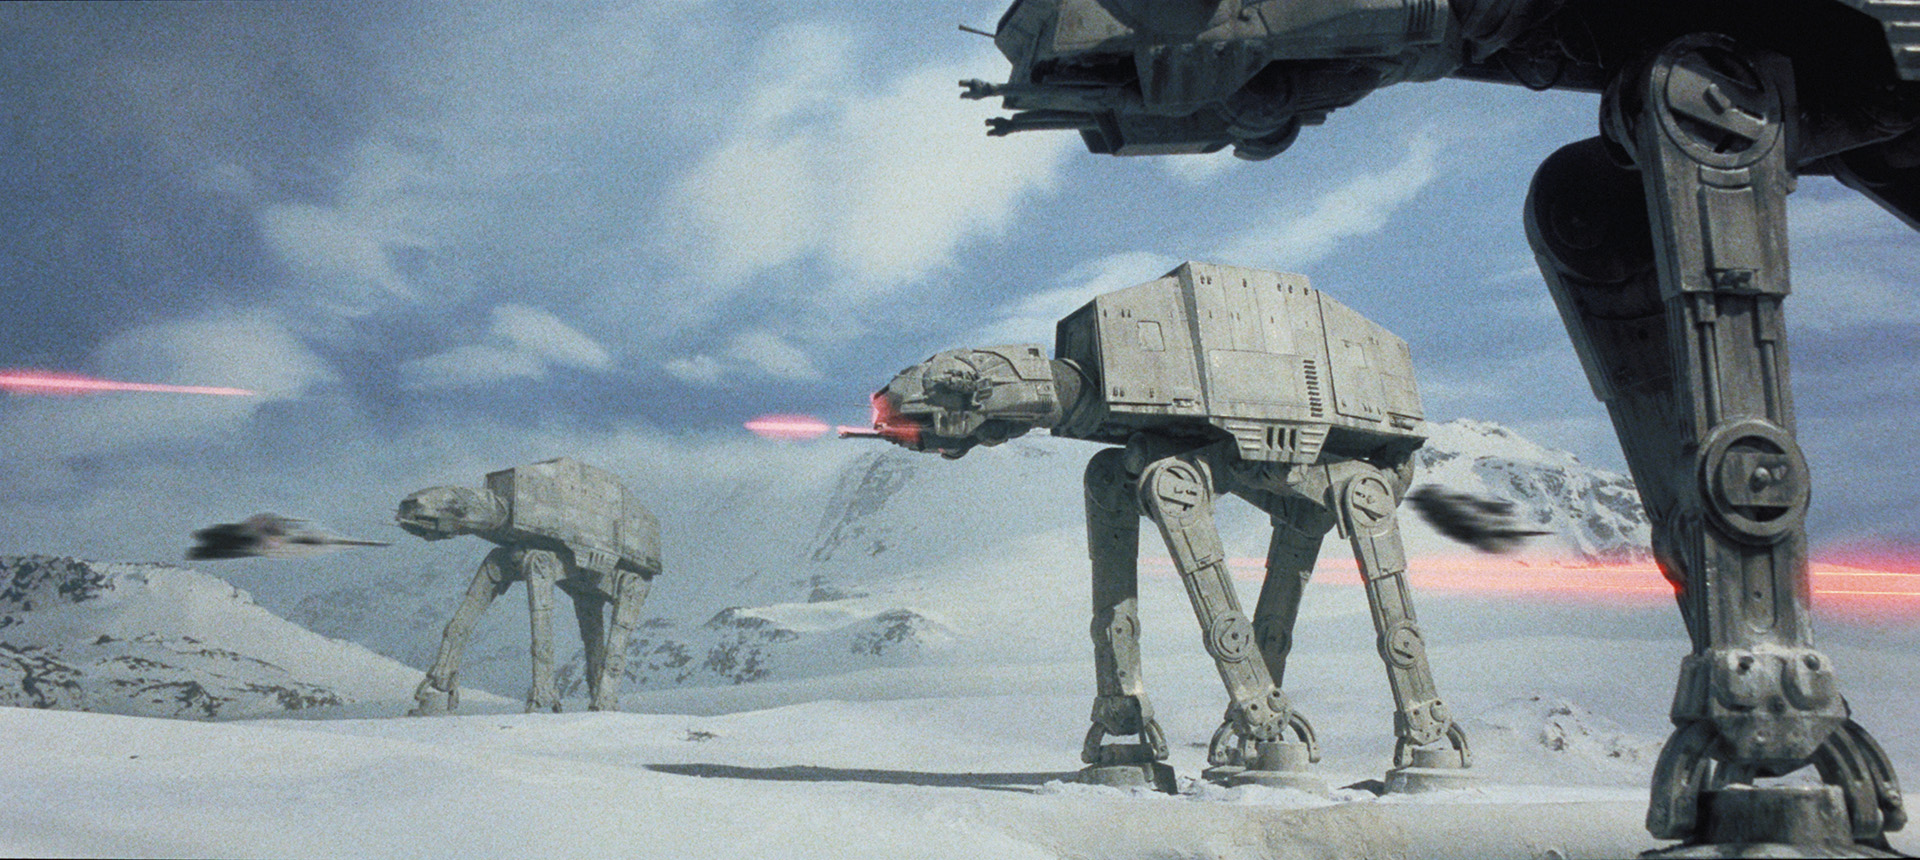 Bedienen Laatste Hallo Star Wars Episode 5: The Empire Strikes Back | Lucasfilm.com